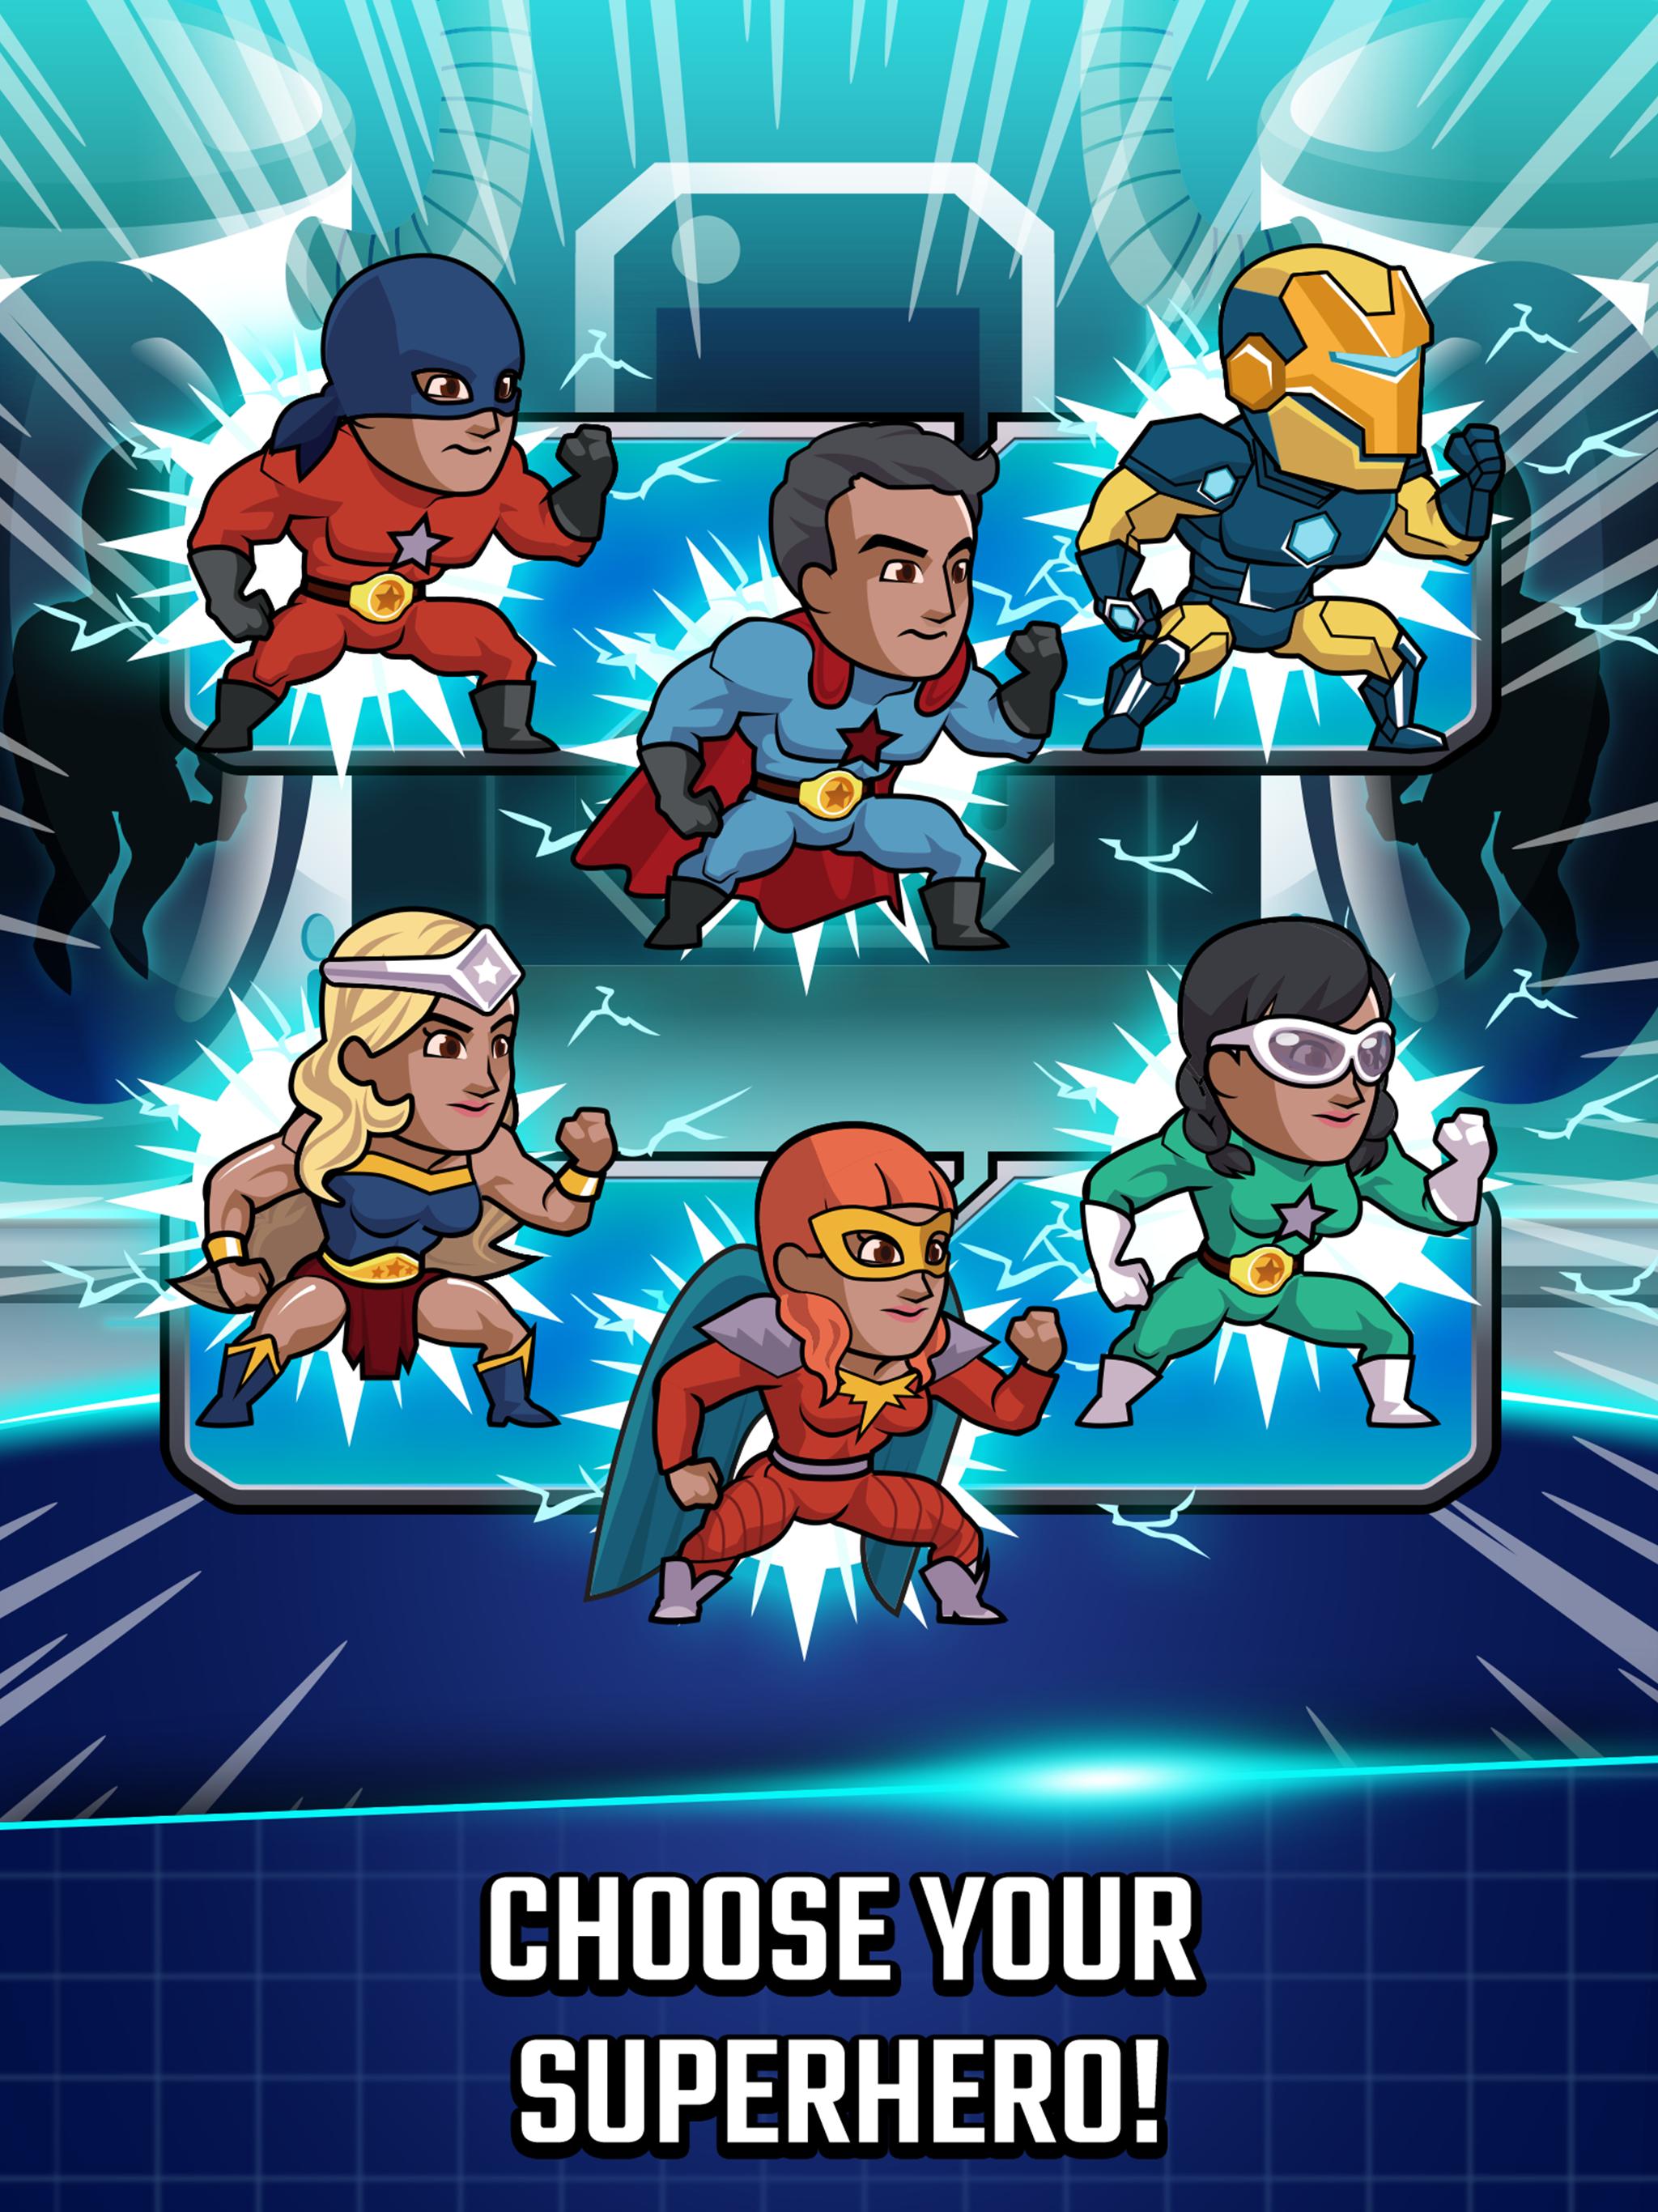 Super League of Heroes - Comic Book Champions 1.0.7 Screenshot 8